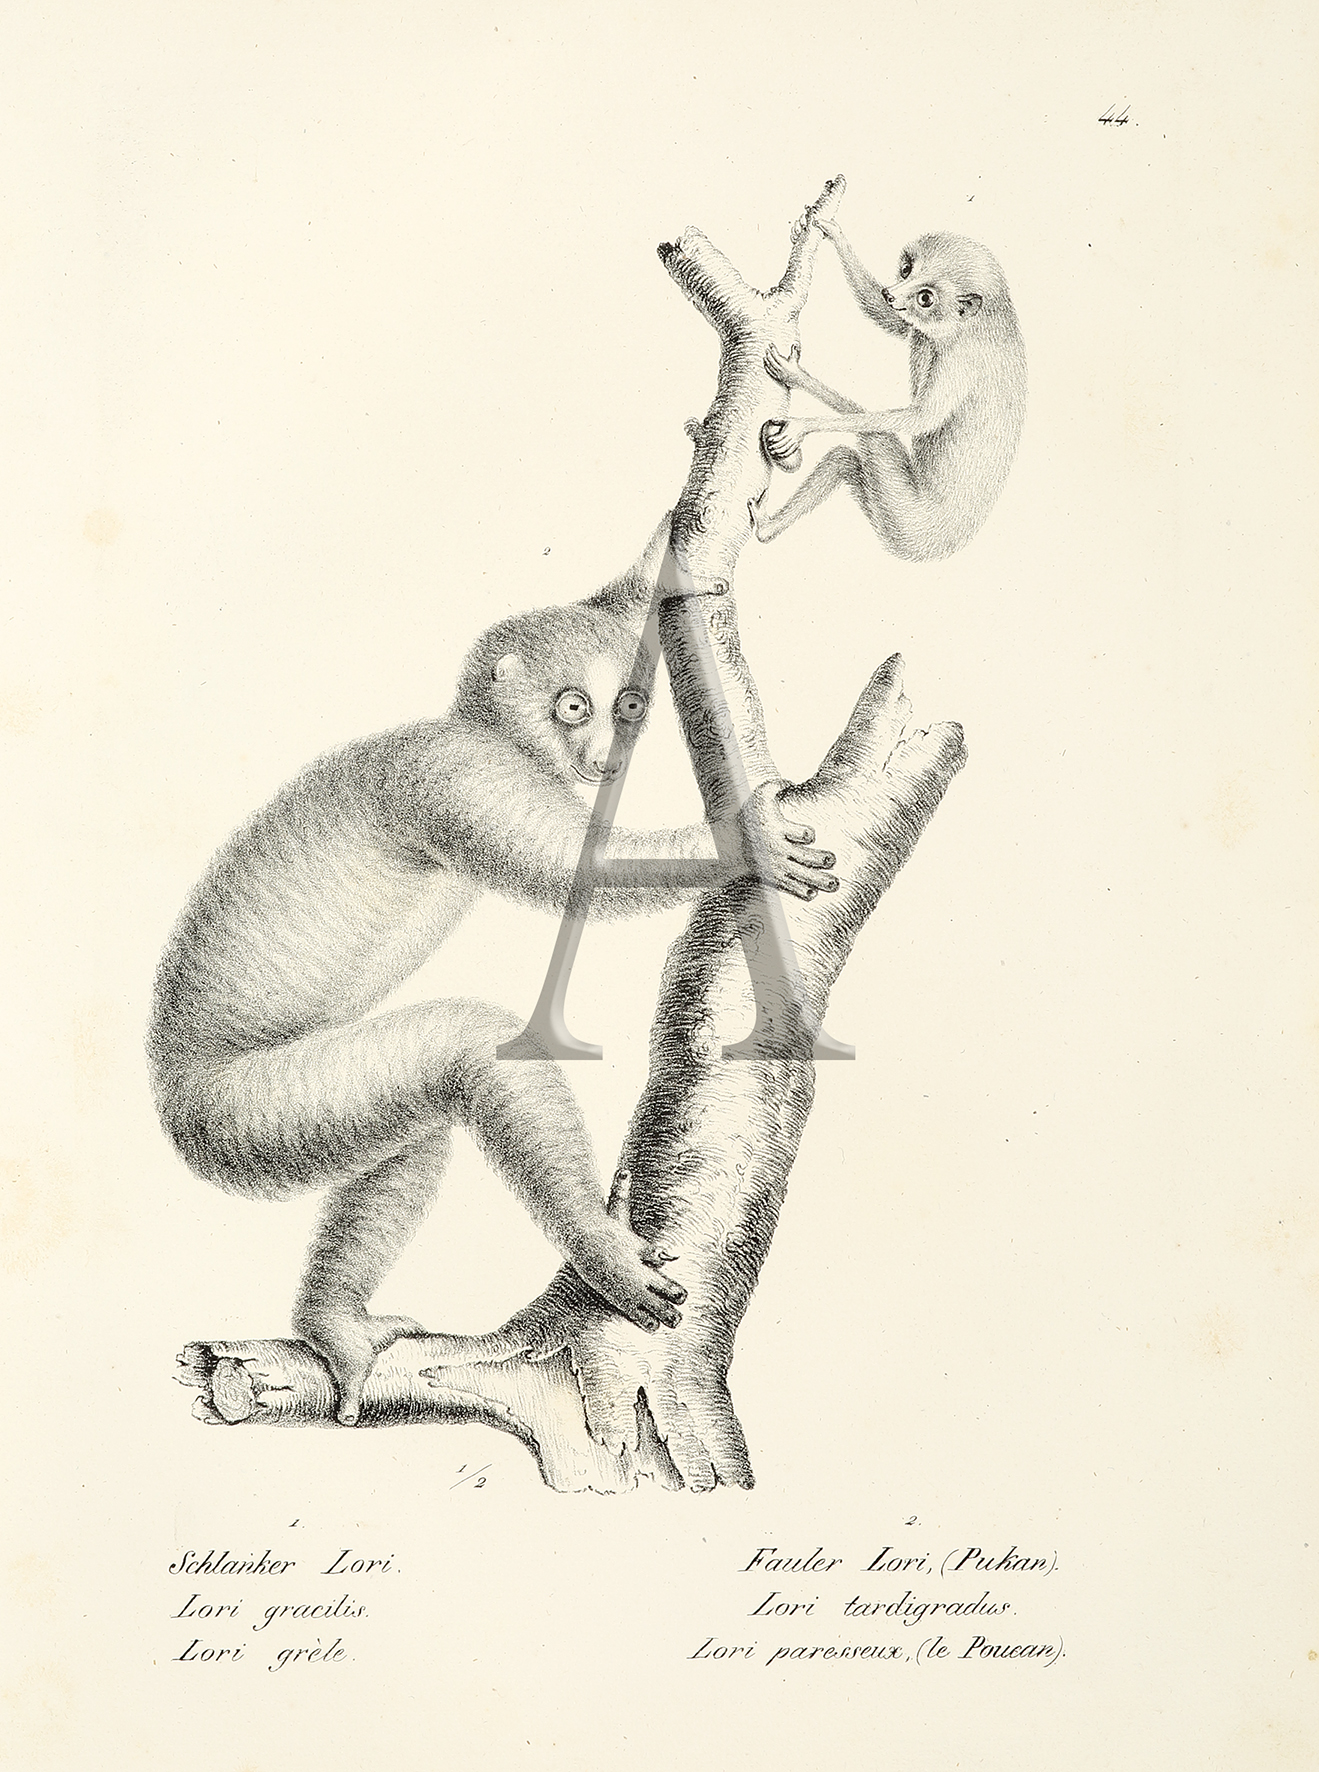 Lori gracilis. Lori tardigradus. (Monkey) - Antique Print from 1824